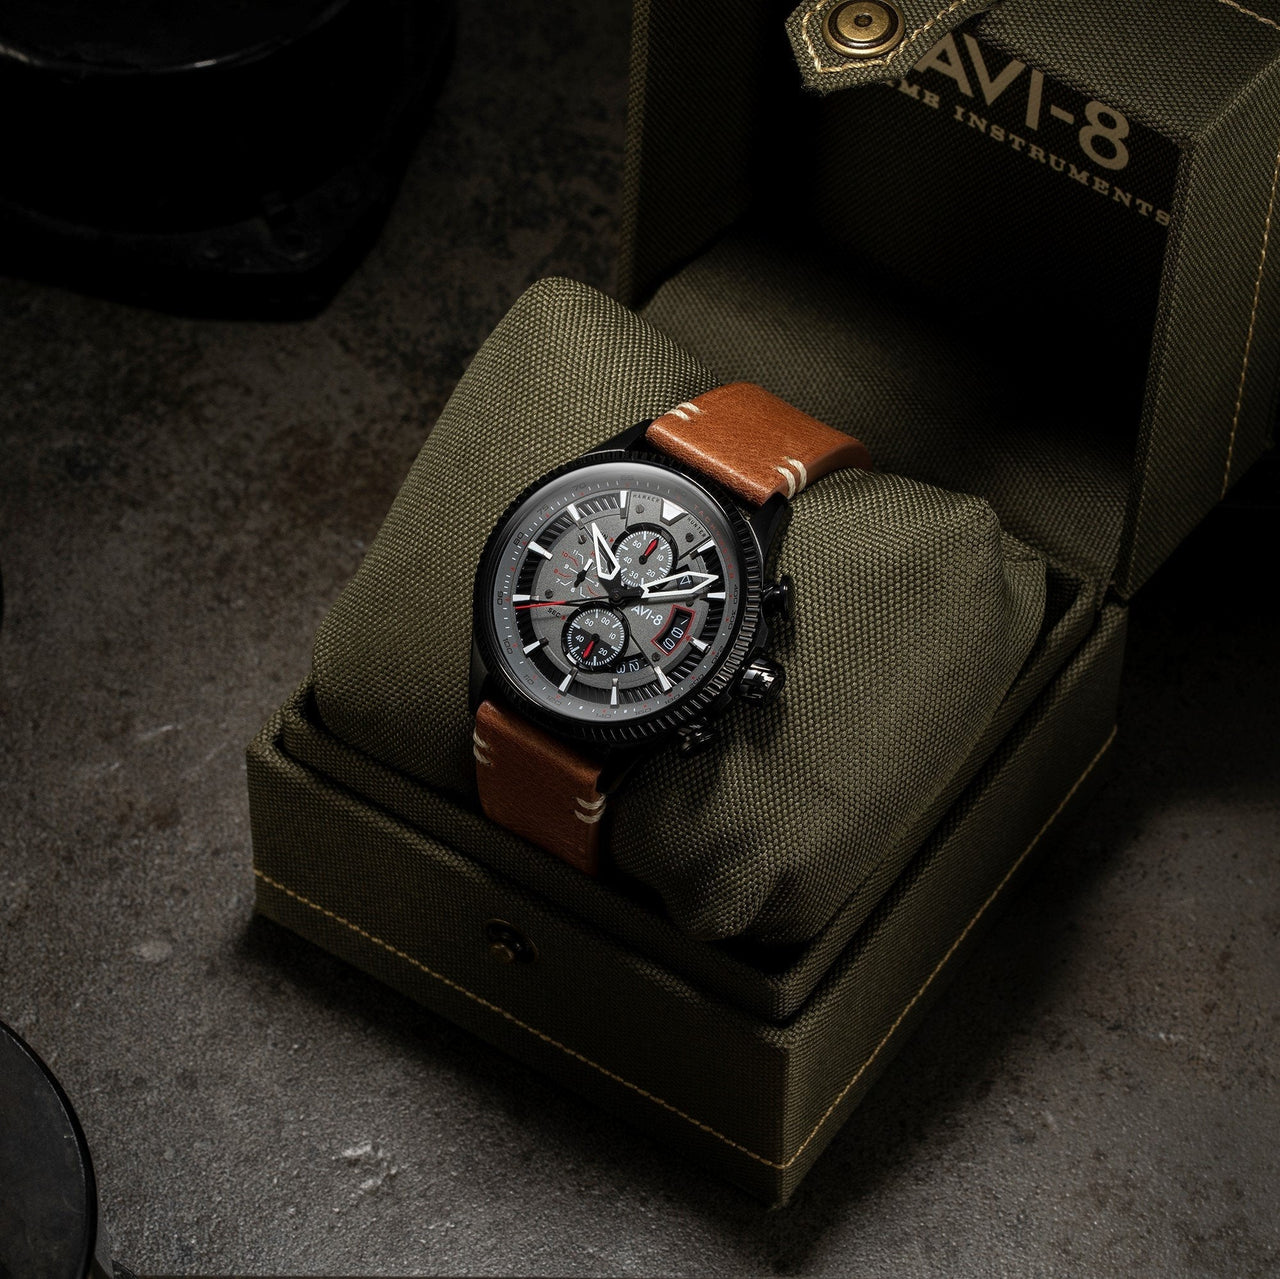 Chronograph Watch - AVI-8 Scarlet Black Brown Hawker Hunter Chronograph Watch AV-4064-03